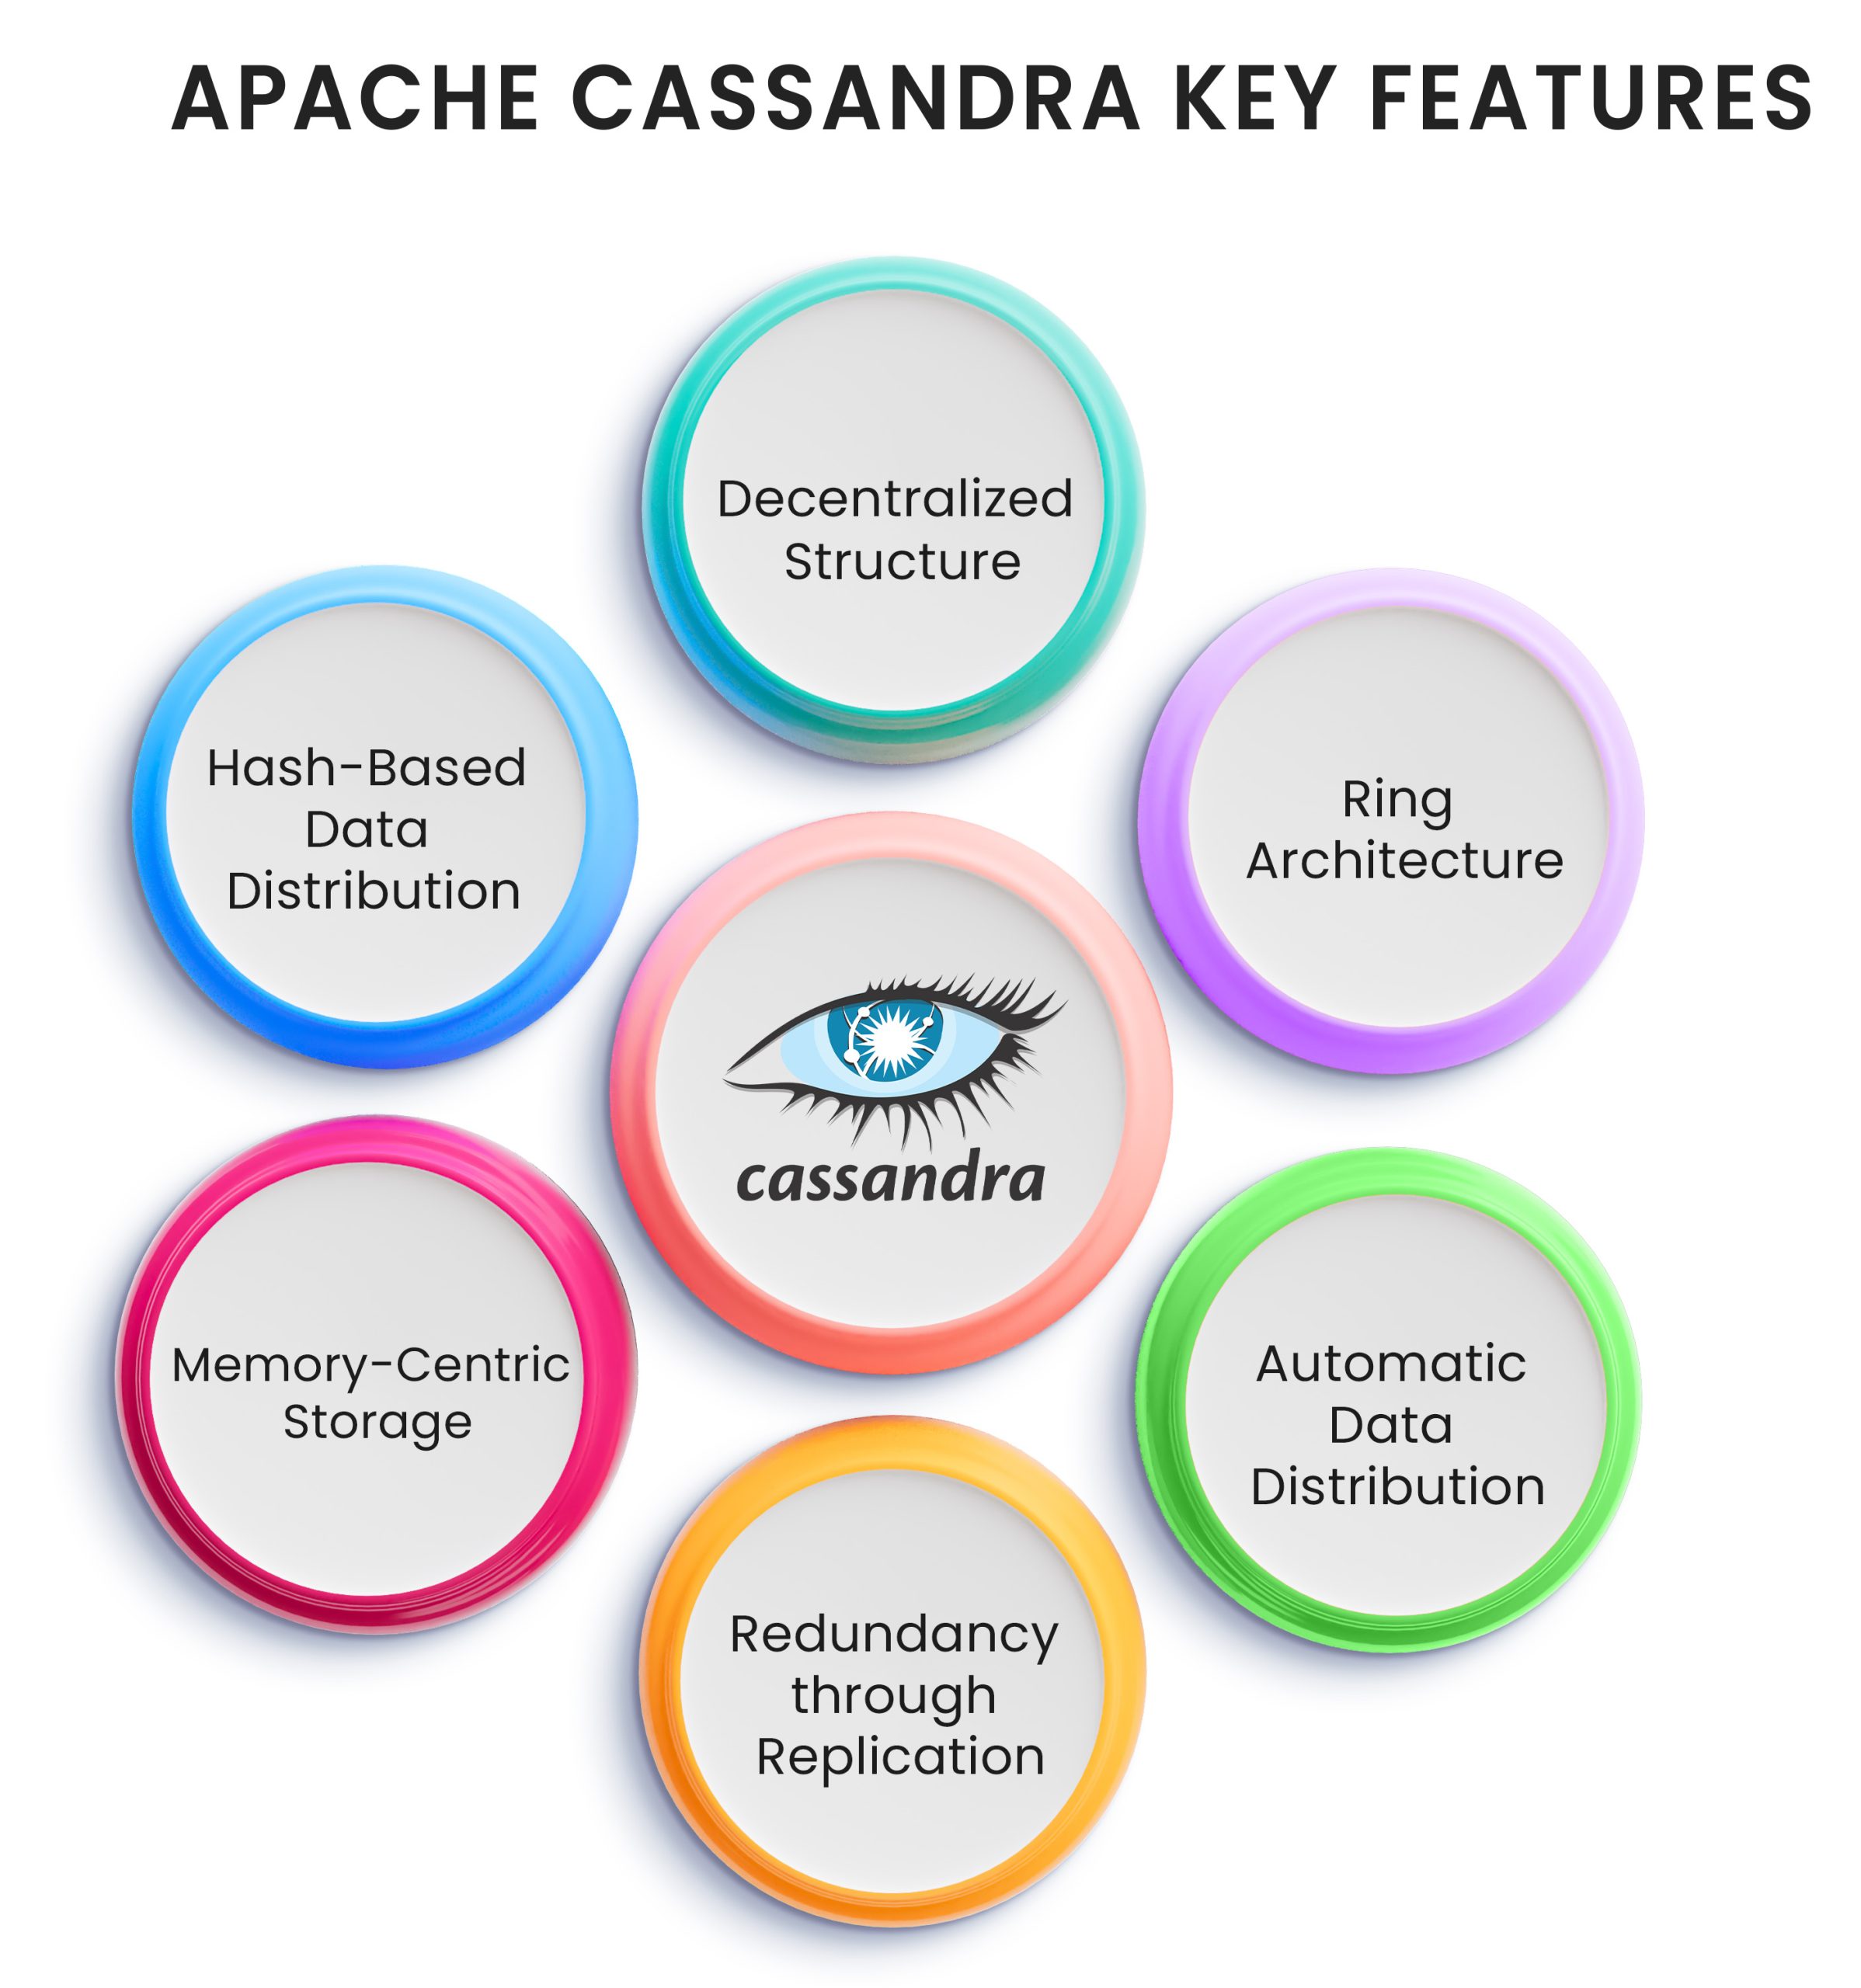 Apache Cassandra Key Features